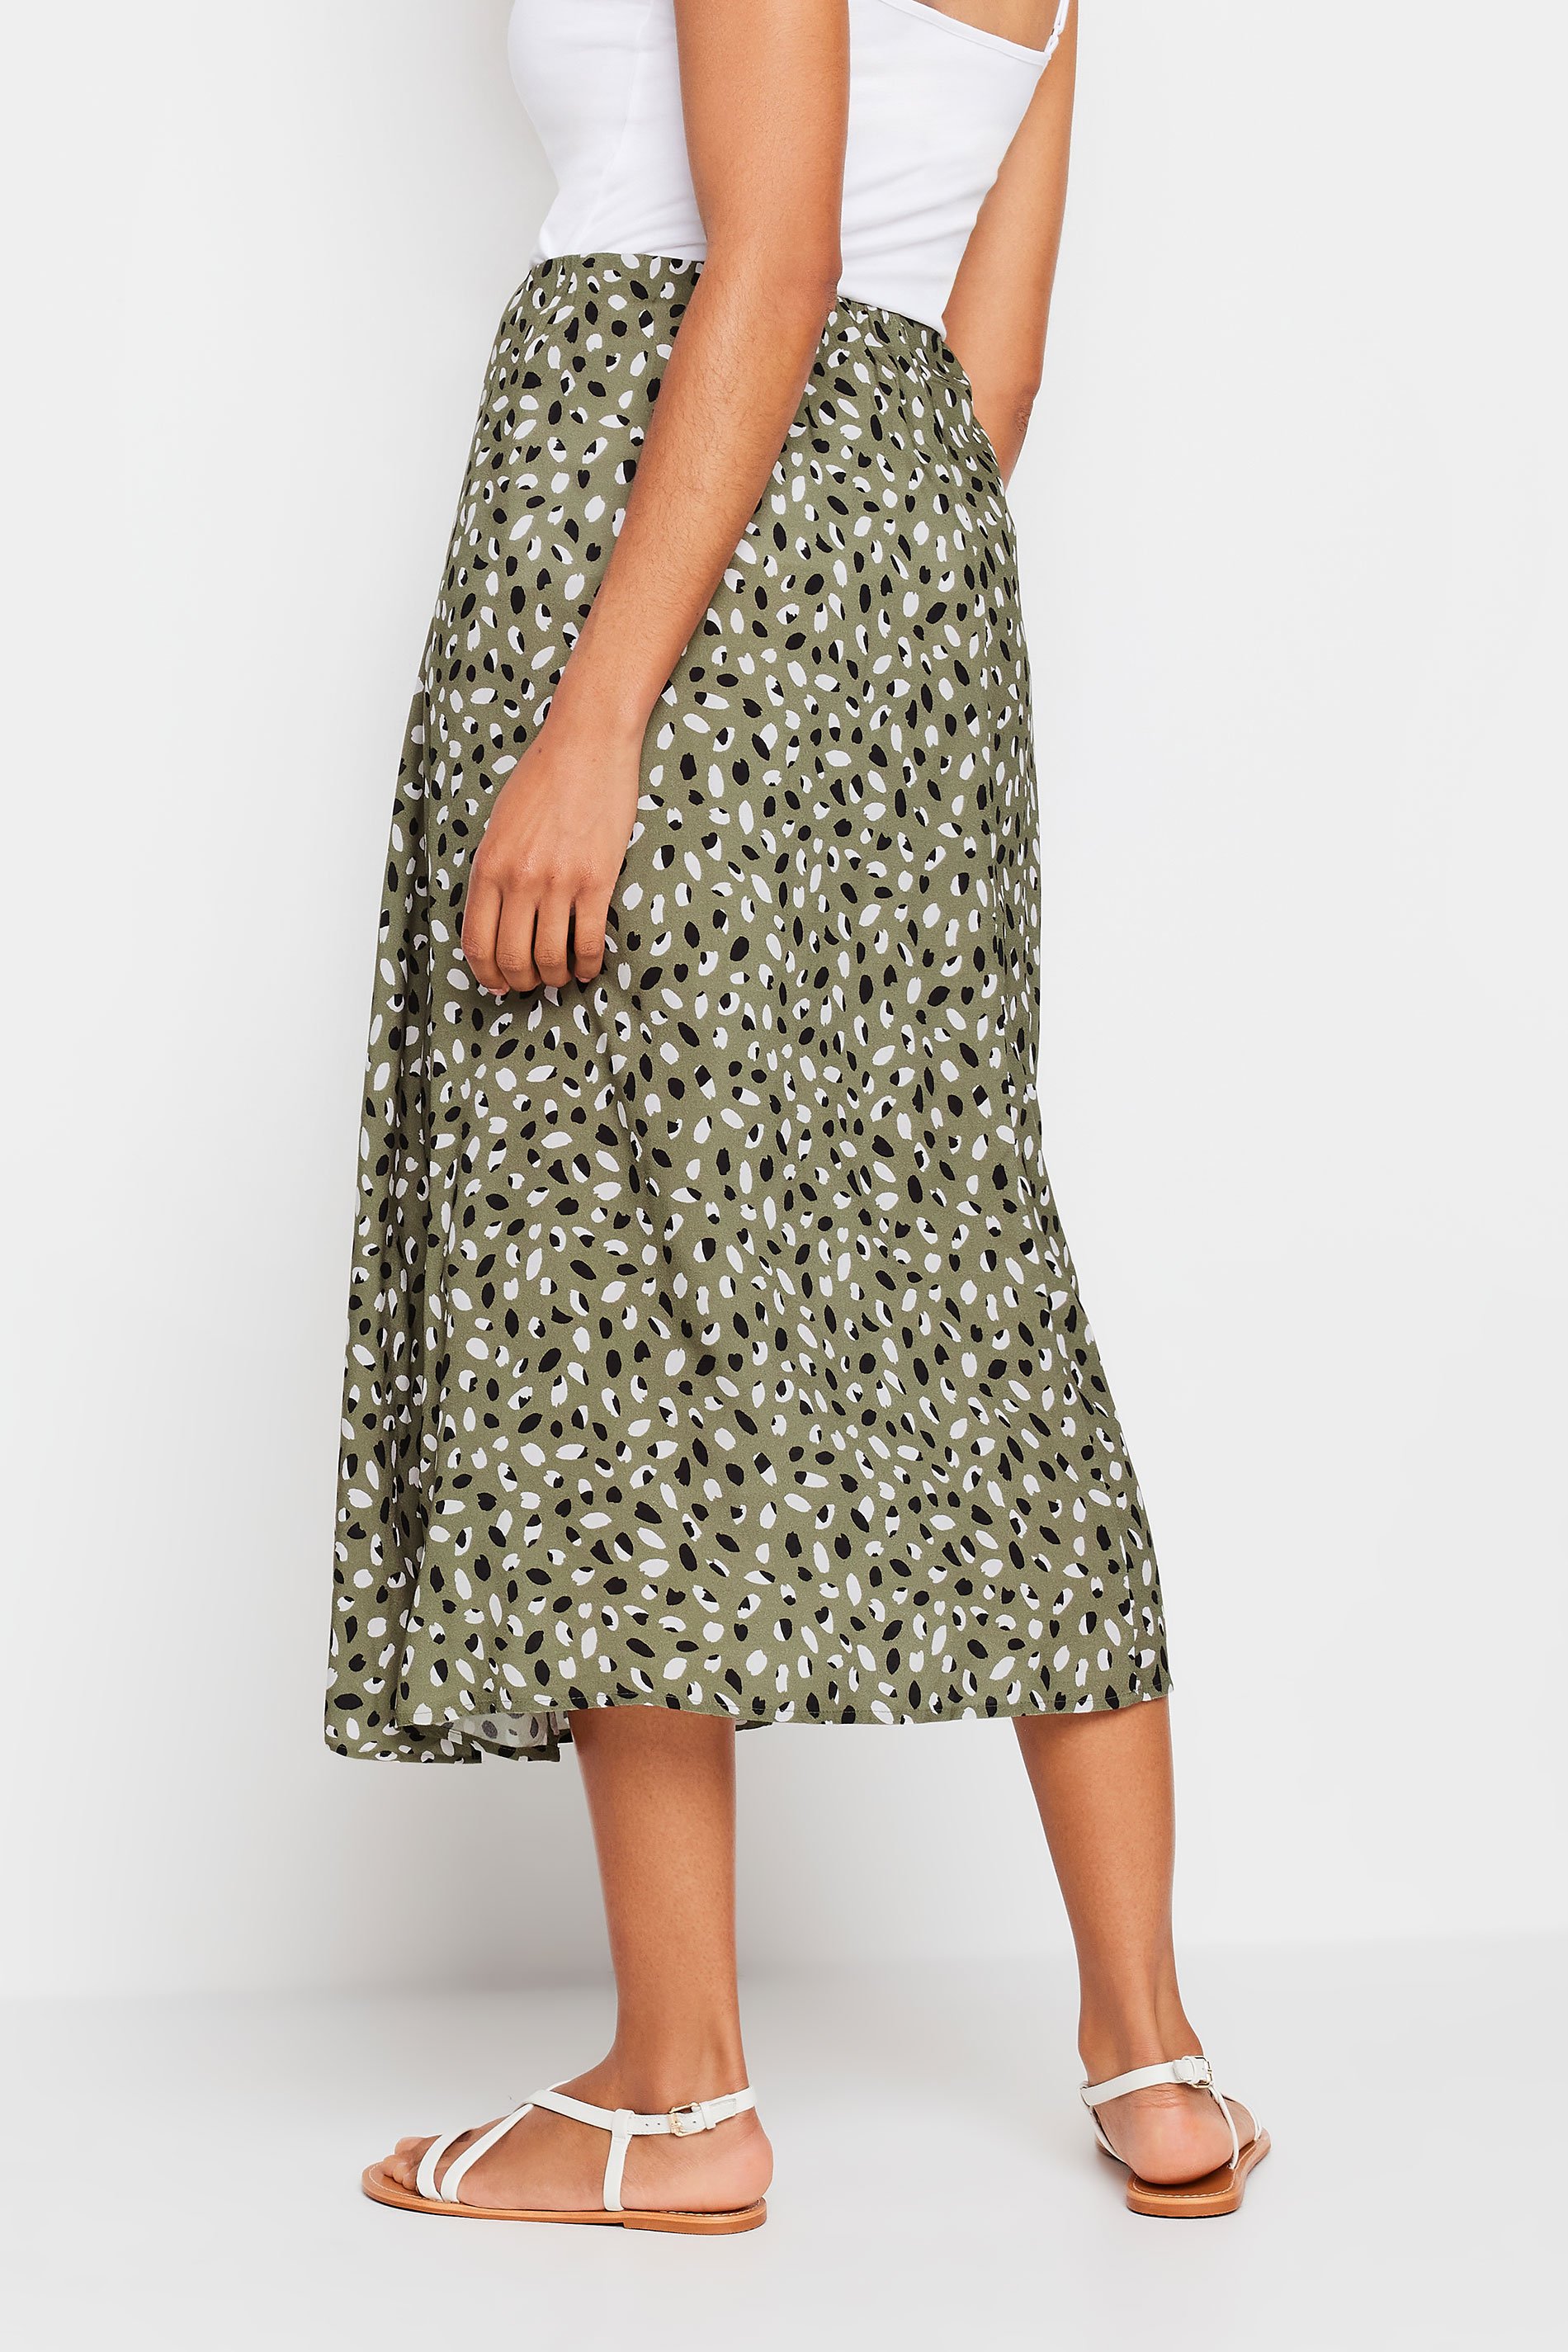 M&Co Khahi Green Spot Print Midaxi Skirt | M&Co 3